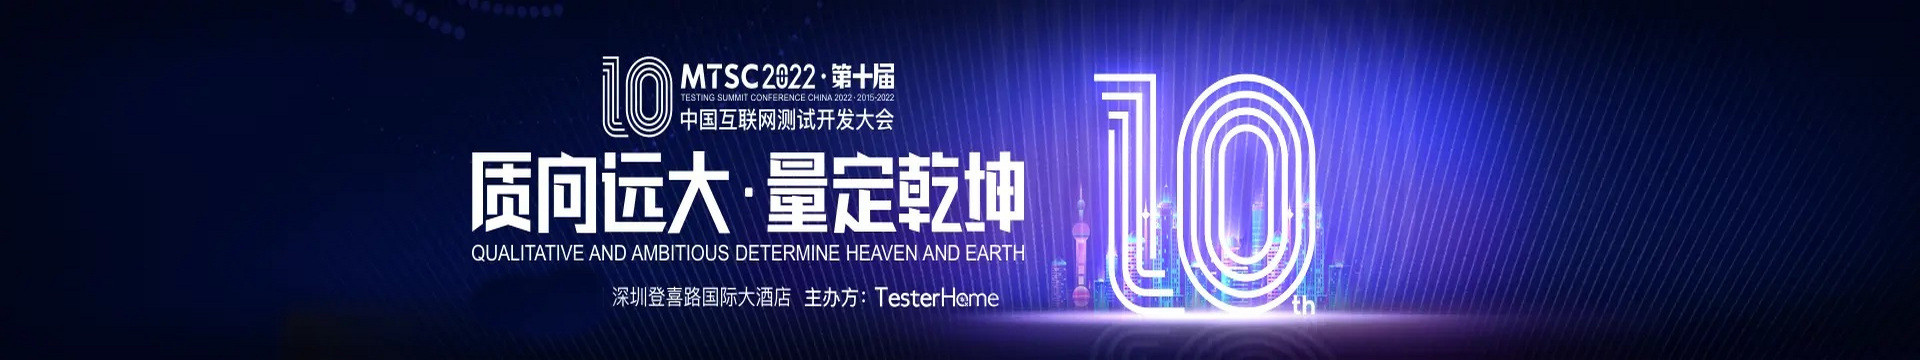 MTSC2022中國互聯網測試開發大會1-深圳站